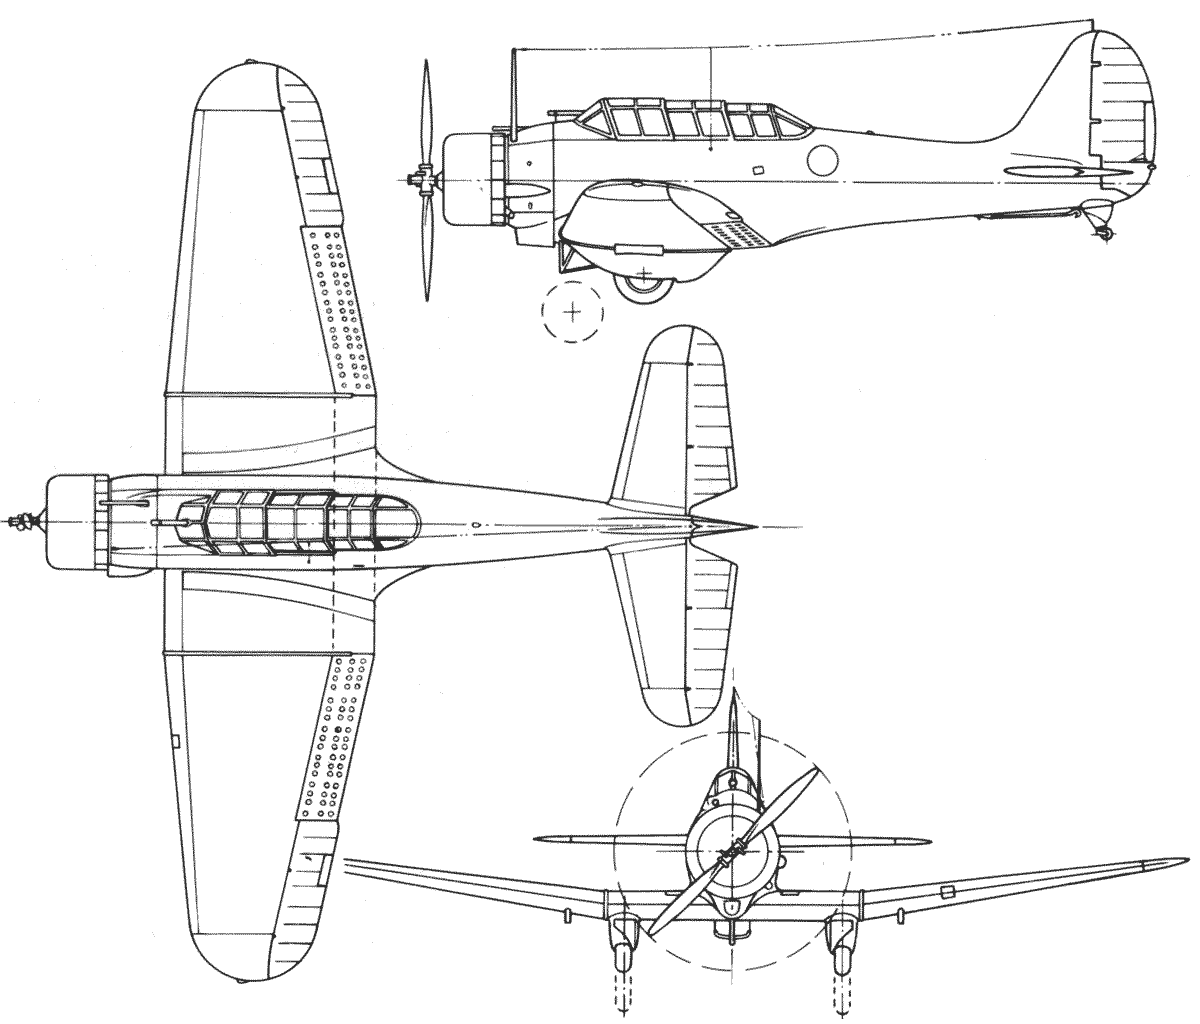 Northrop BT-1 blueprint